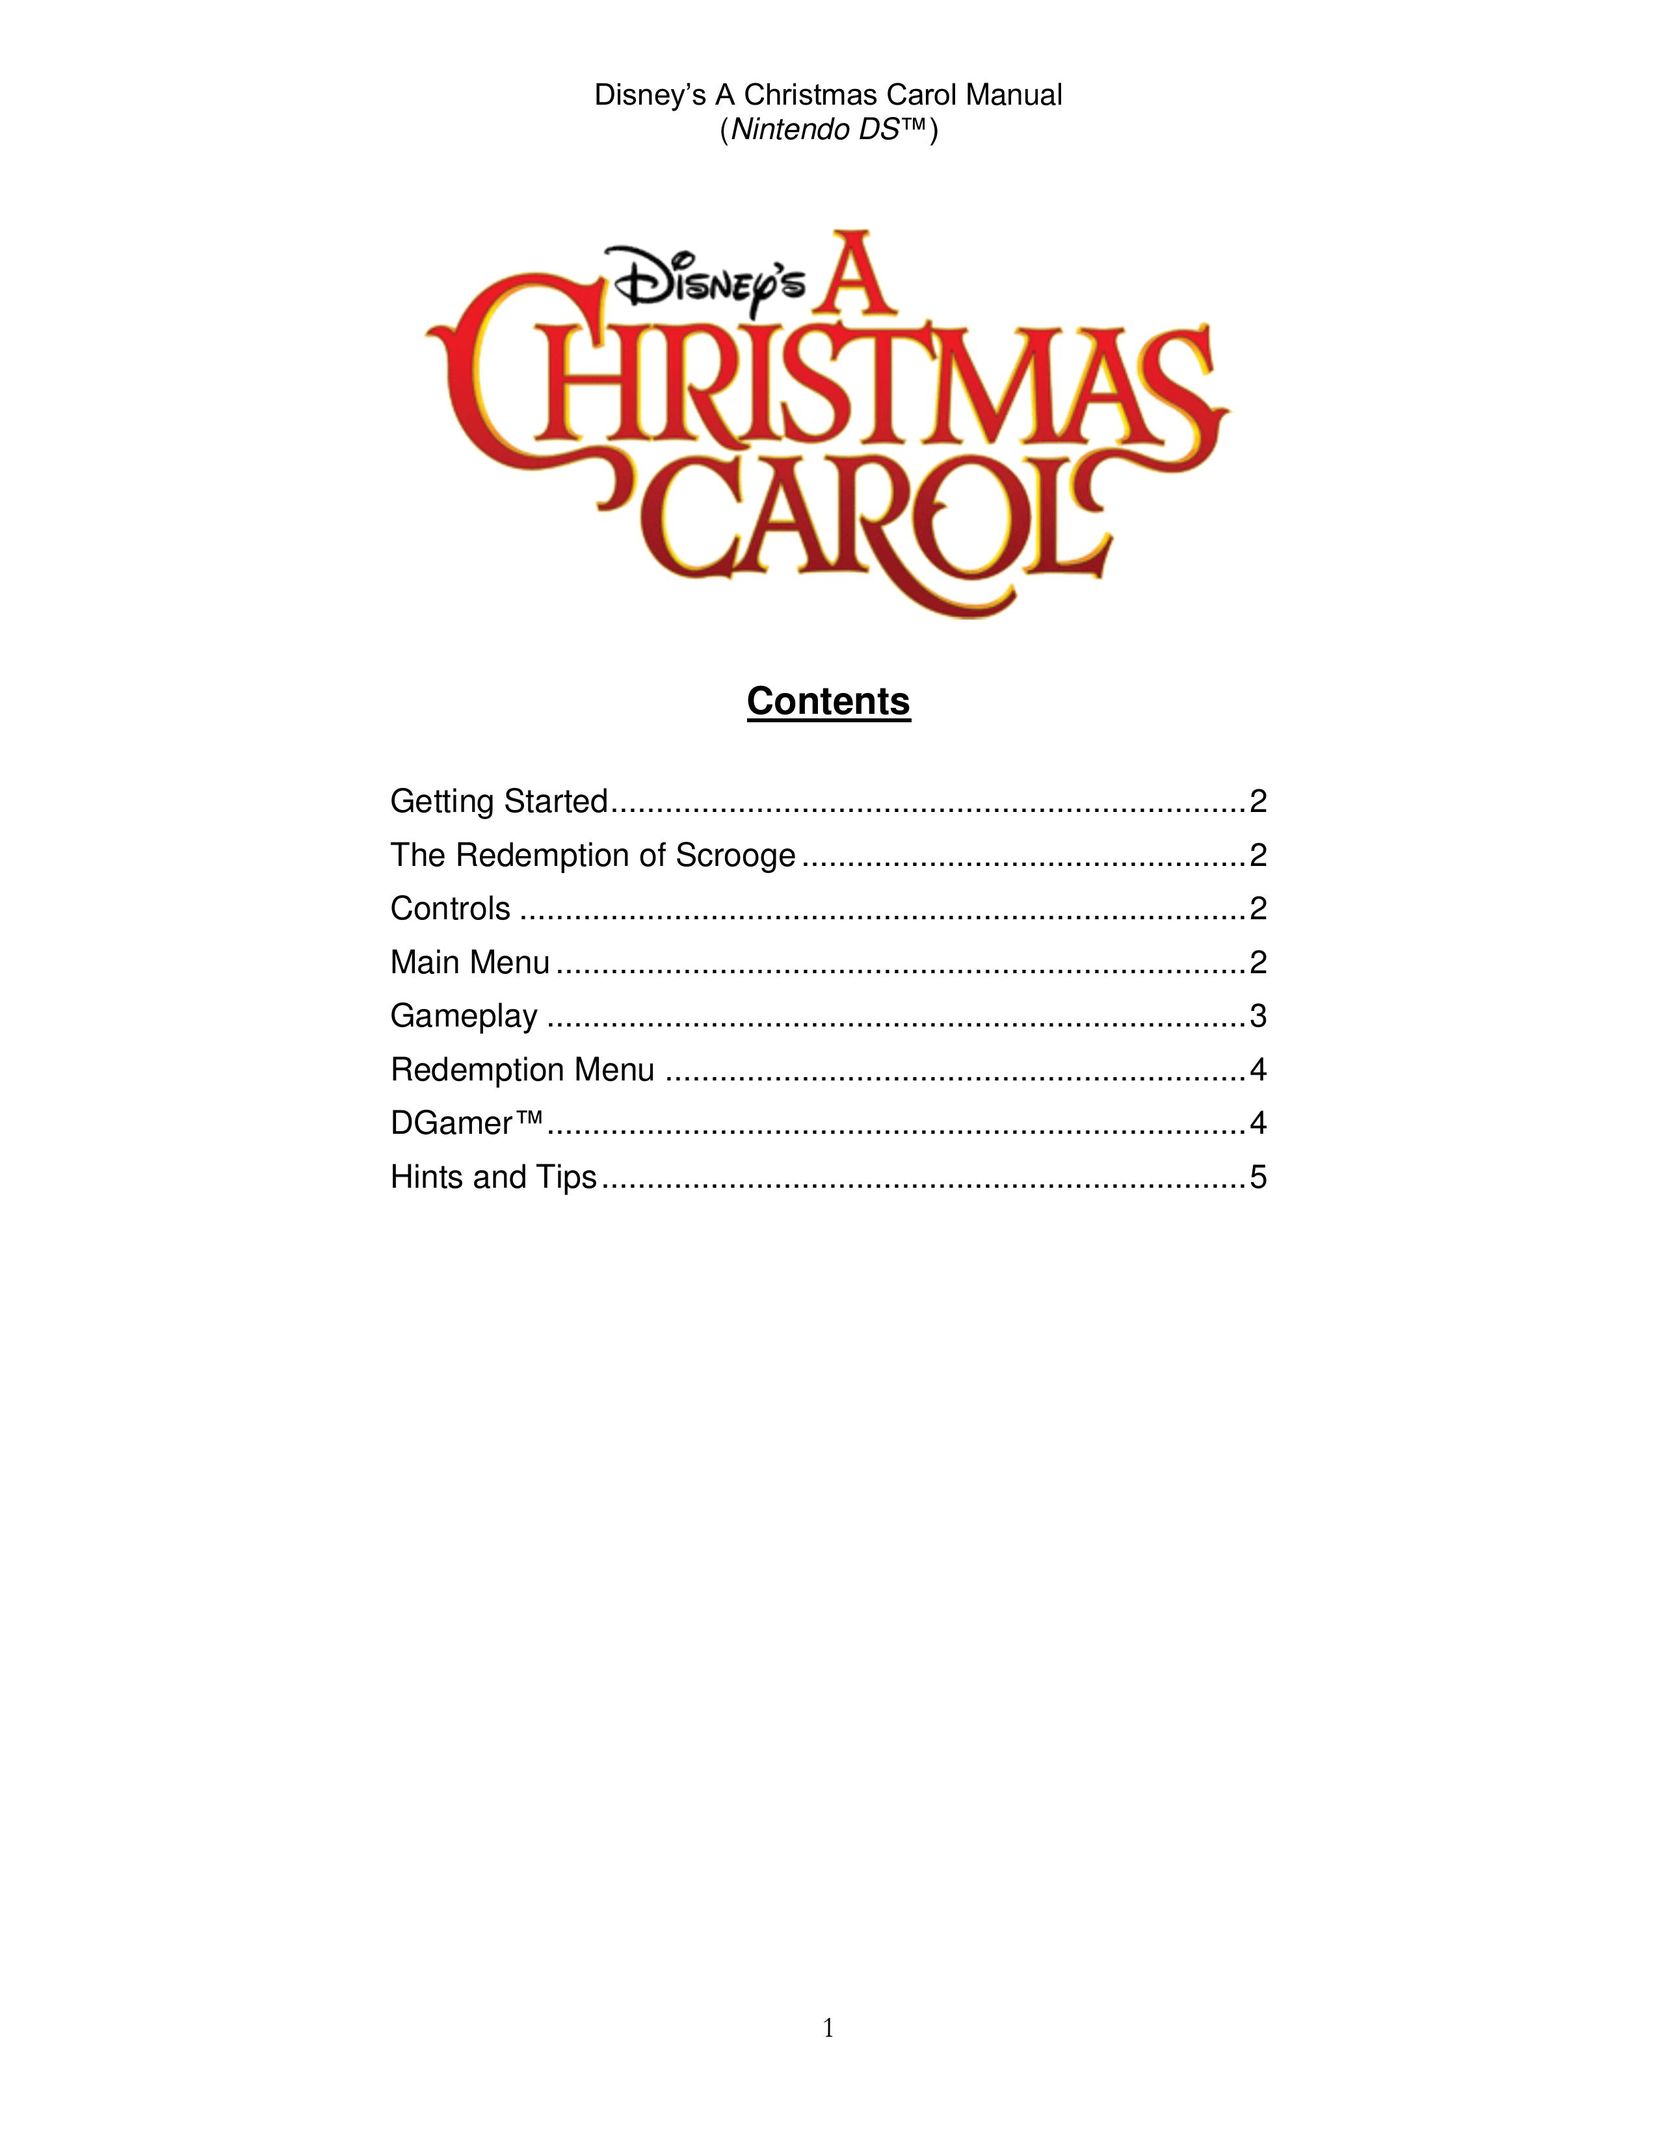 Disney Interactive Studios A Christmas Carol for Nintendo DS Video Games User Manual